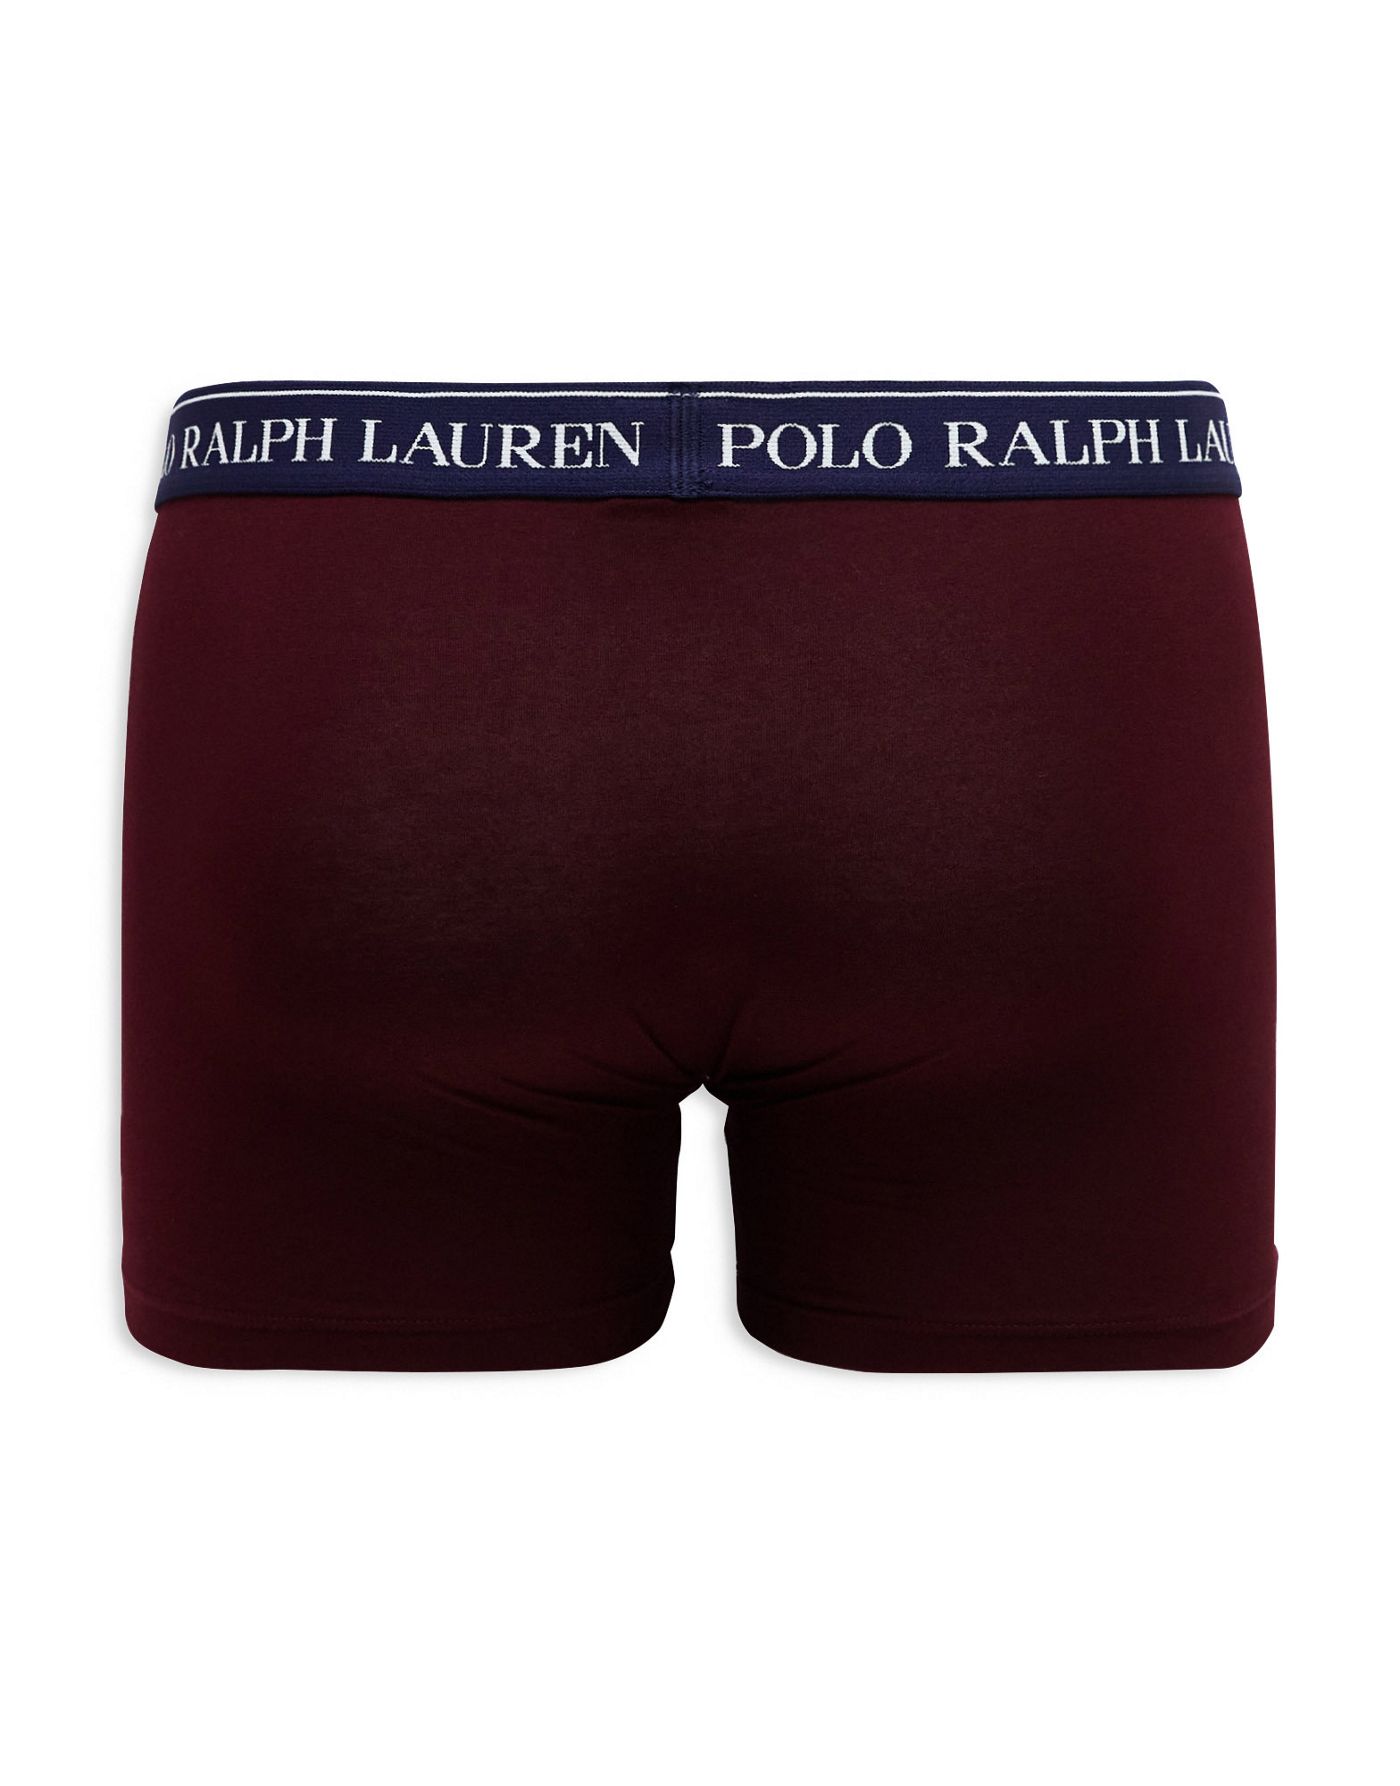 Polo Ralph Lauren 3 pack trunks in green burgundy yellow with logo waistband